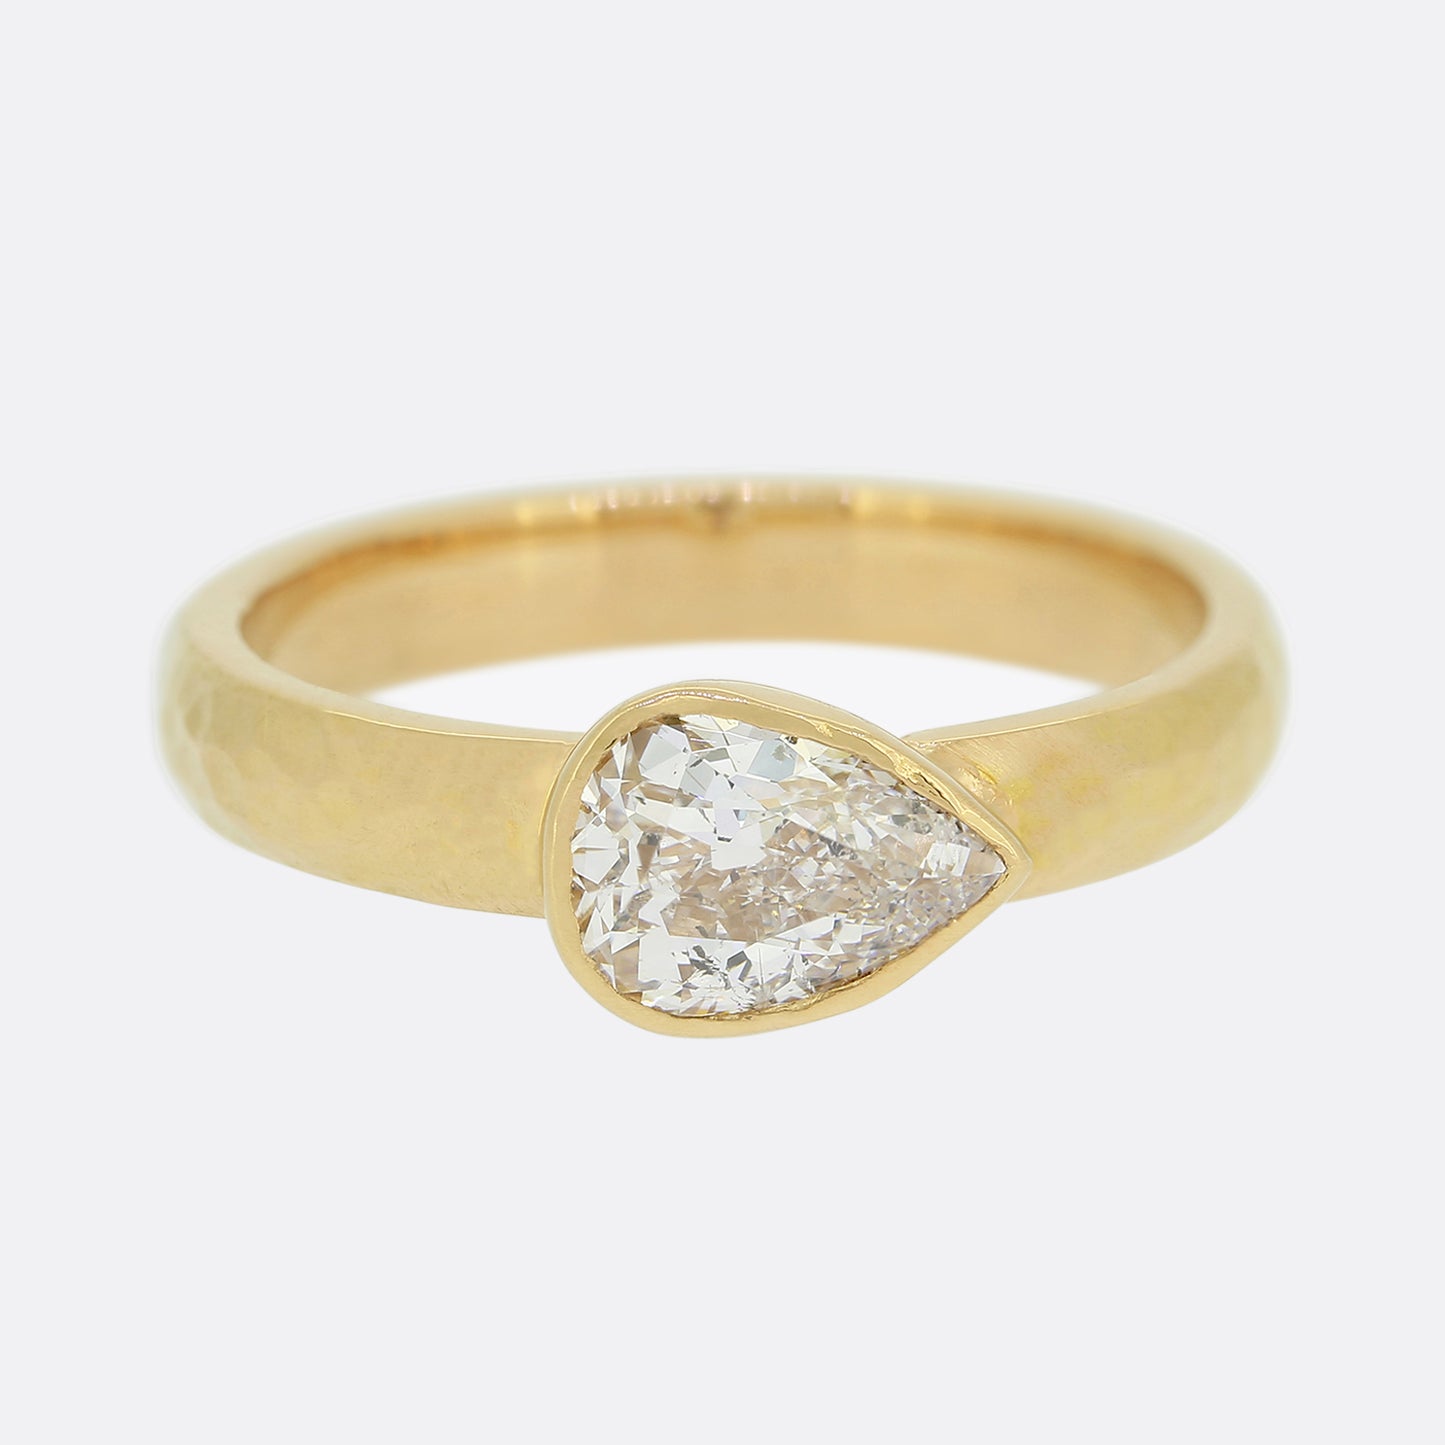 TVJ 0.91 Carat Old Pear Cut Diamond Ring